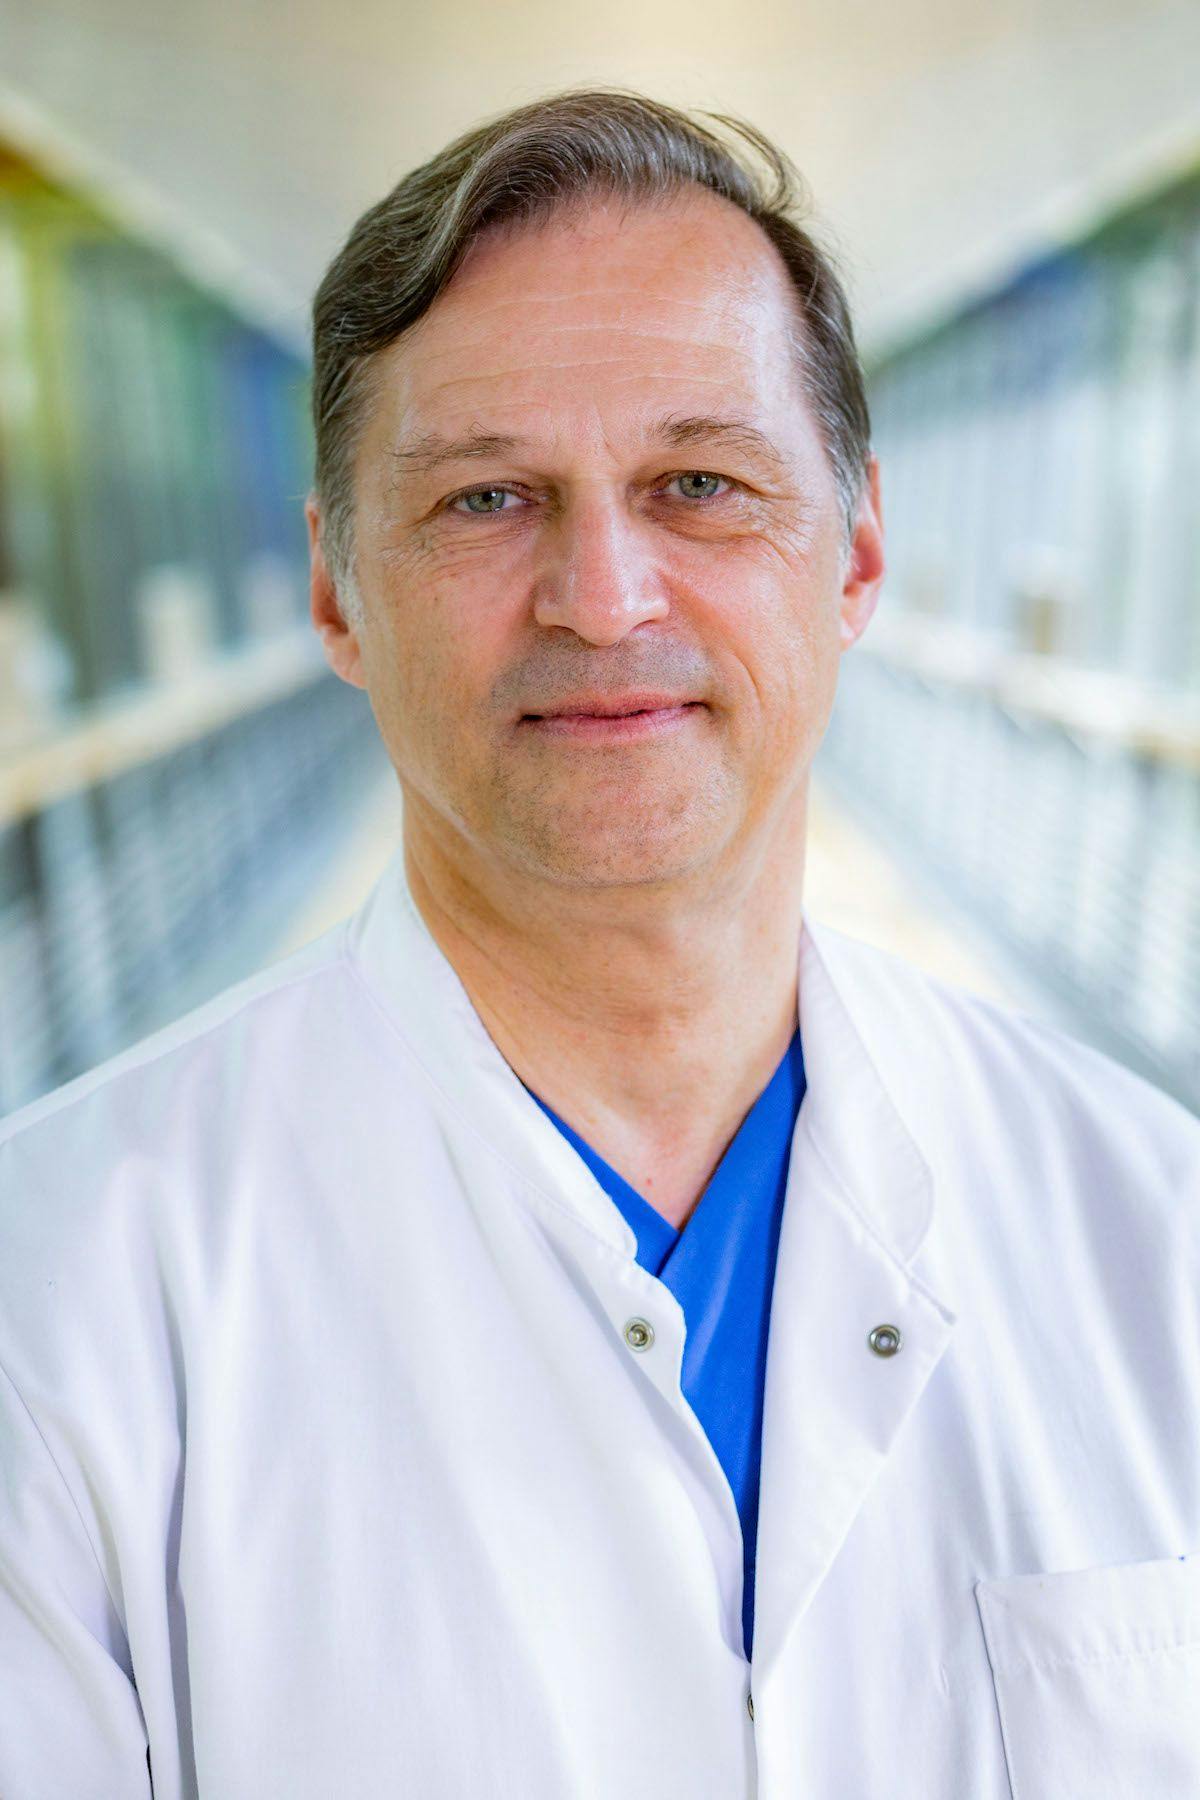 A headshot of Dr Marcus Blum